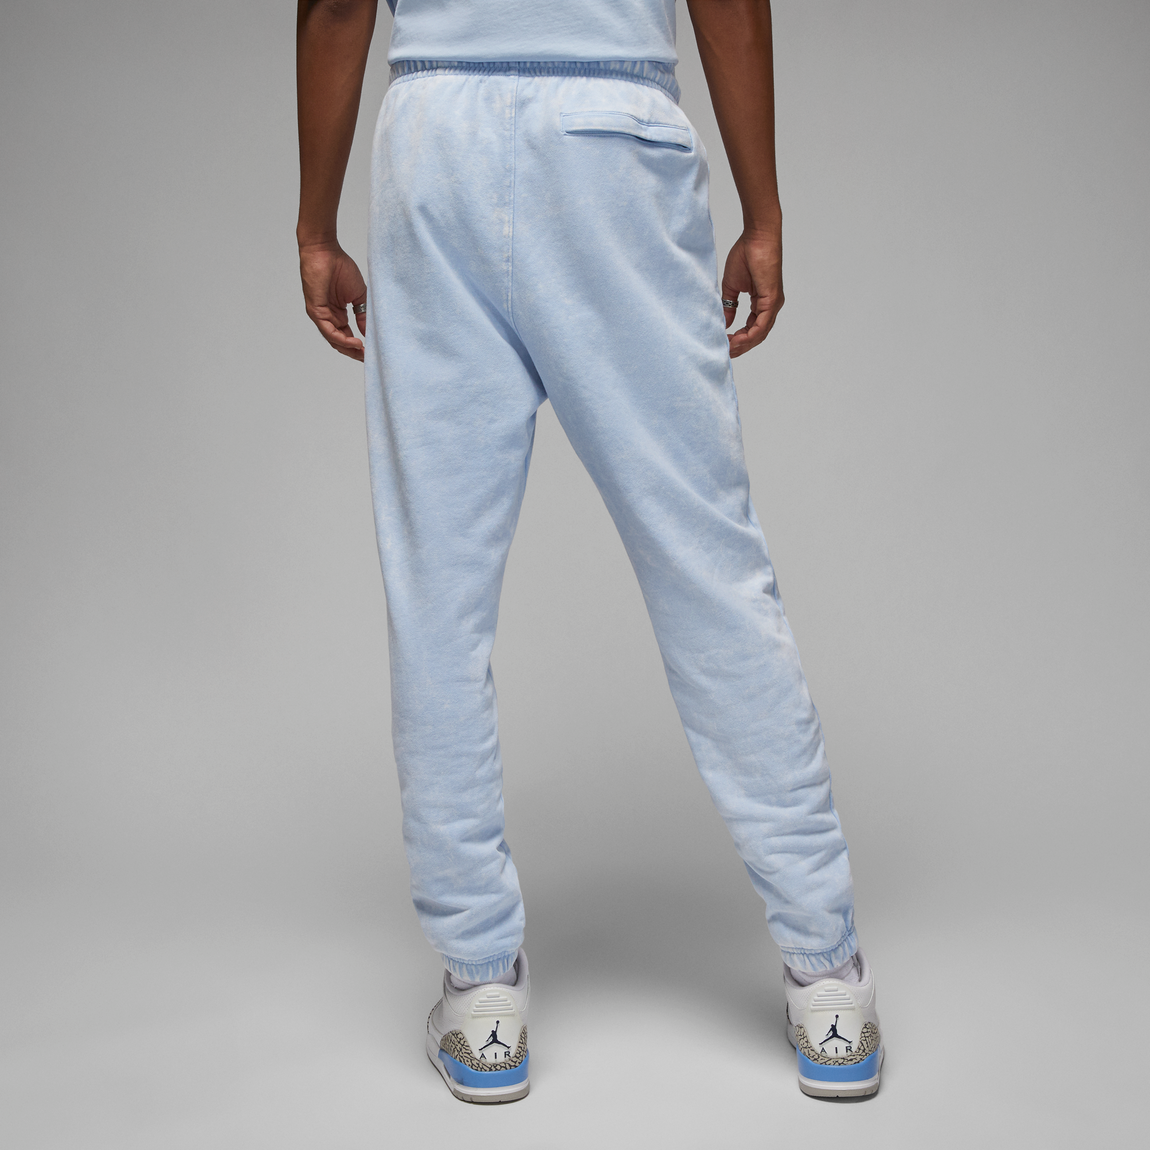 Jordan Flight Fleece Pants (Ice Blue/Sail) - Jordan Flight Fleece Pants (Ice Blue/Sail) - 